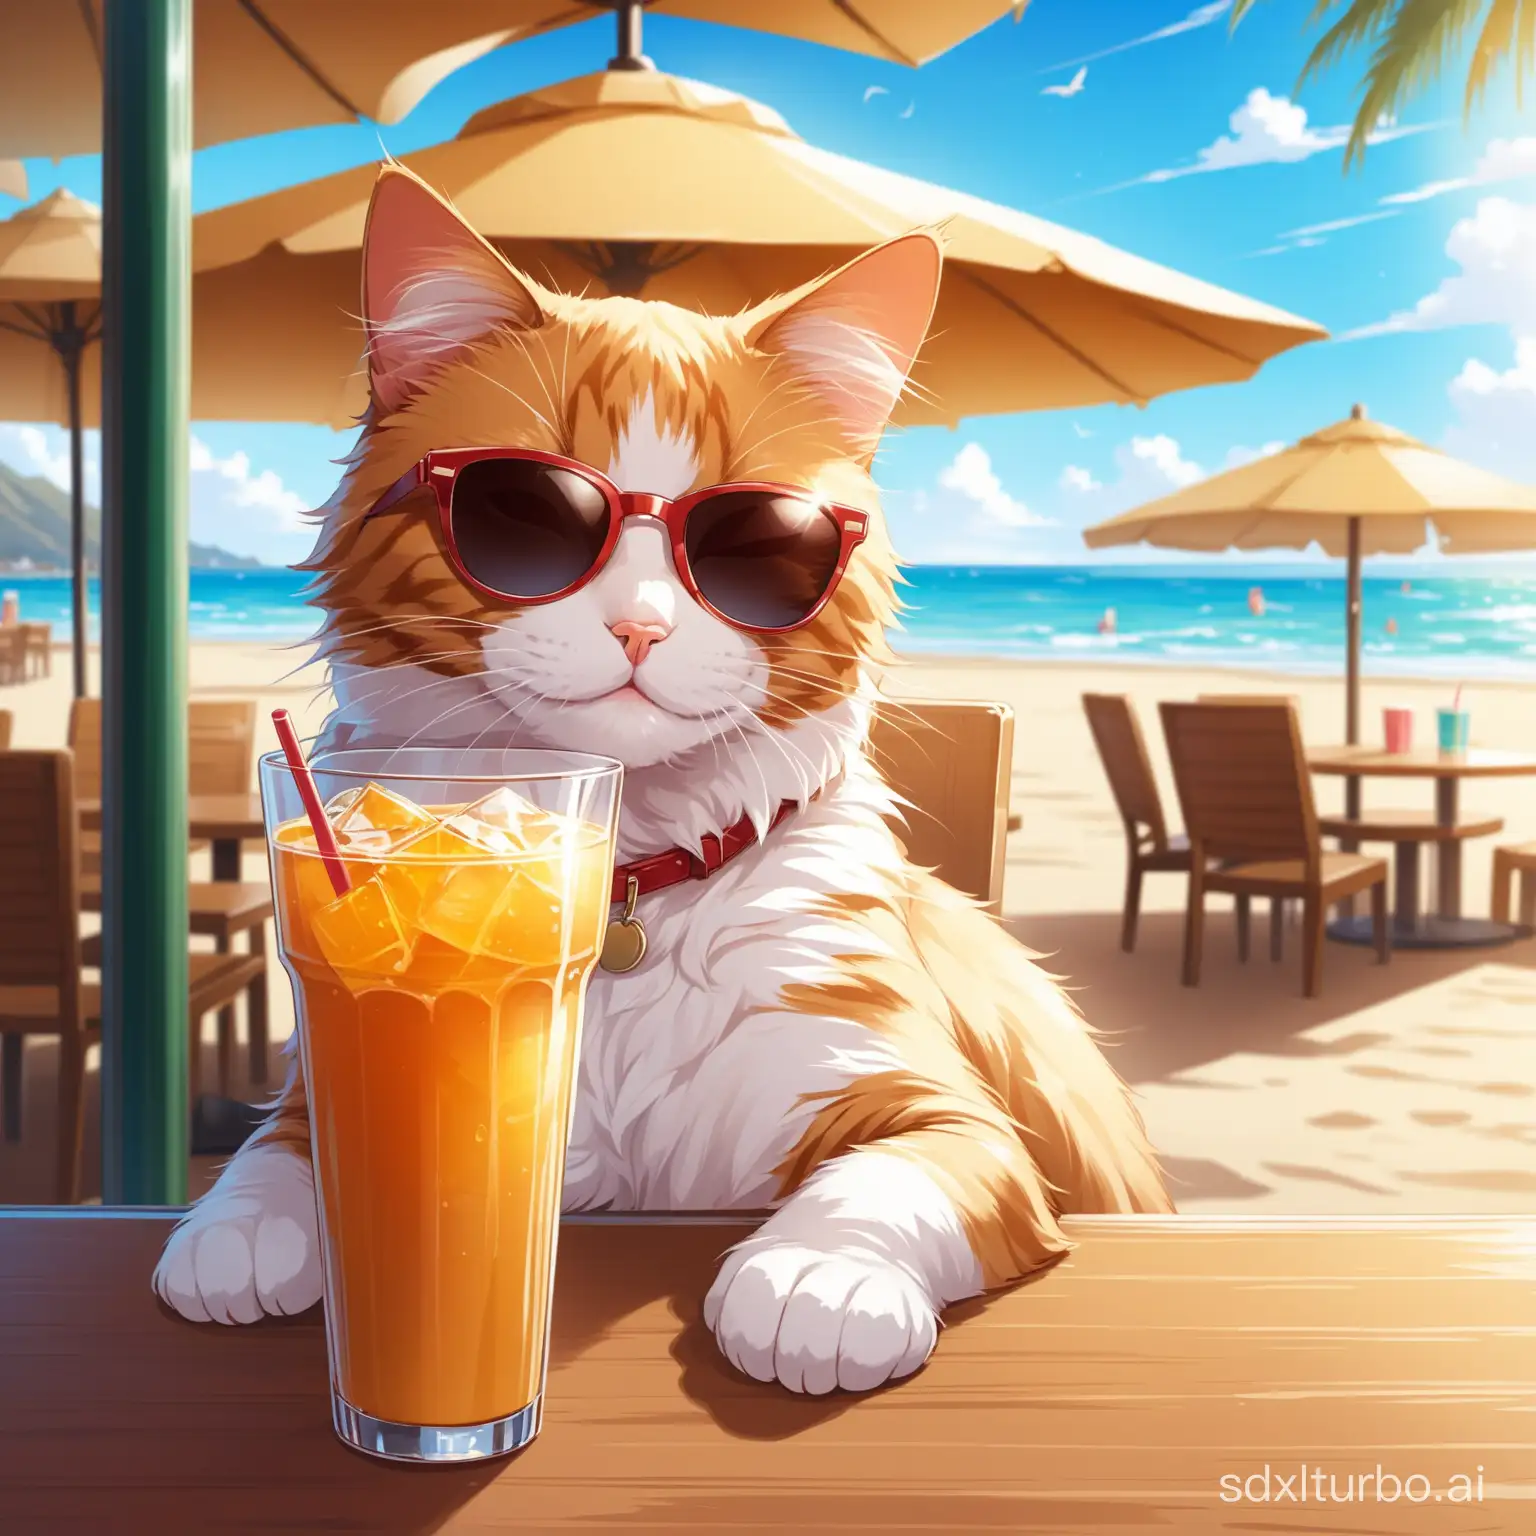 A cat wearing sunglasses relaxing in a California beach cafe